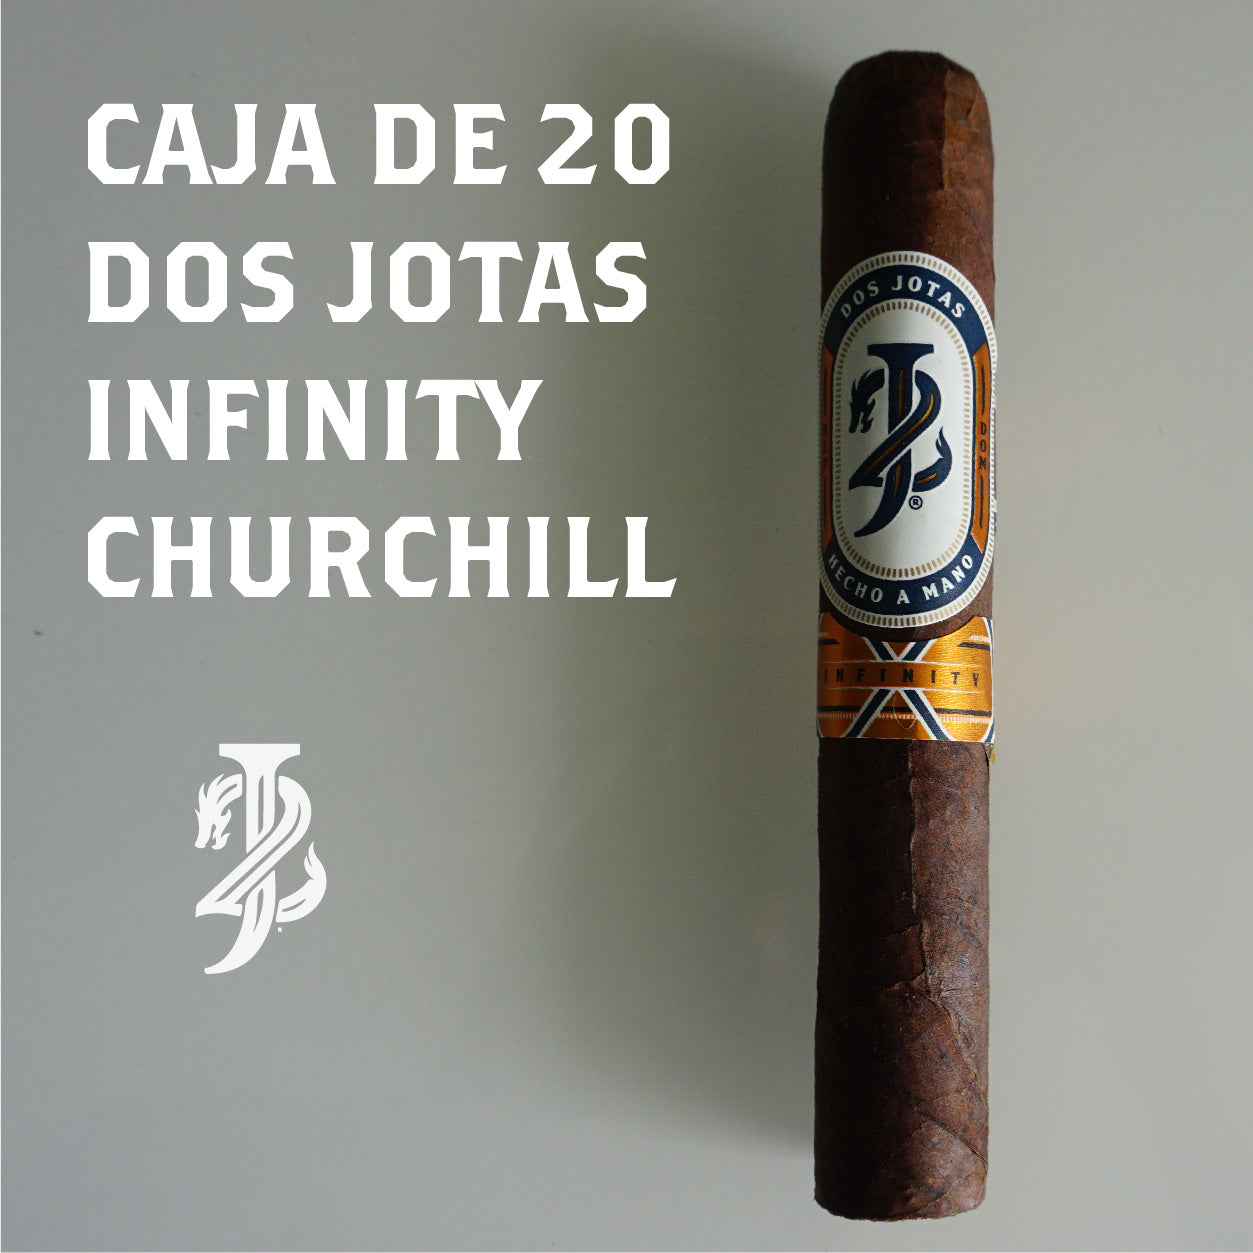 Infinity Dos Jotas - Churchill